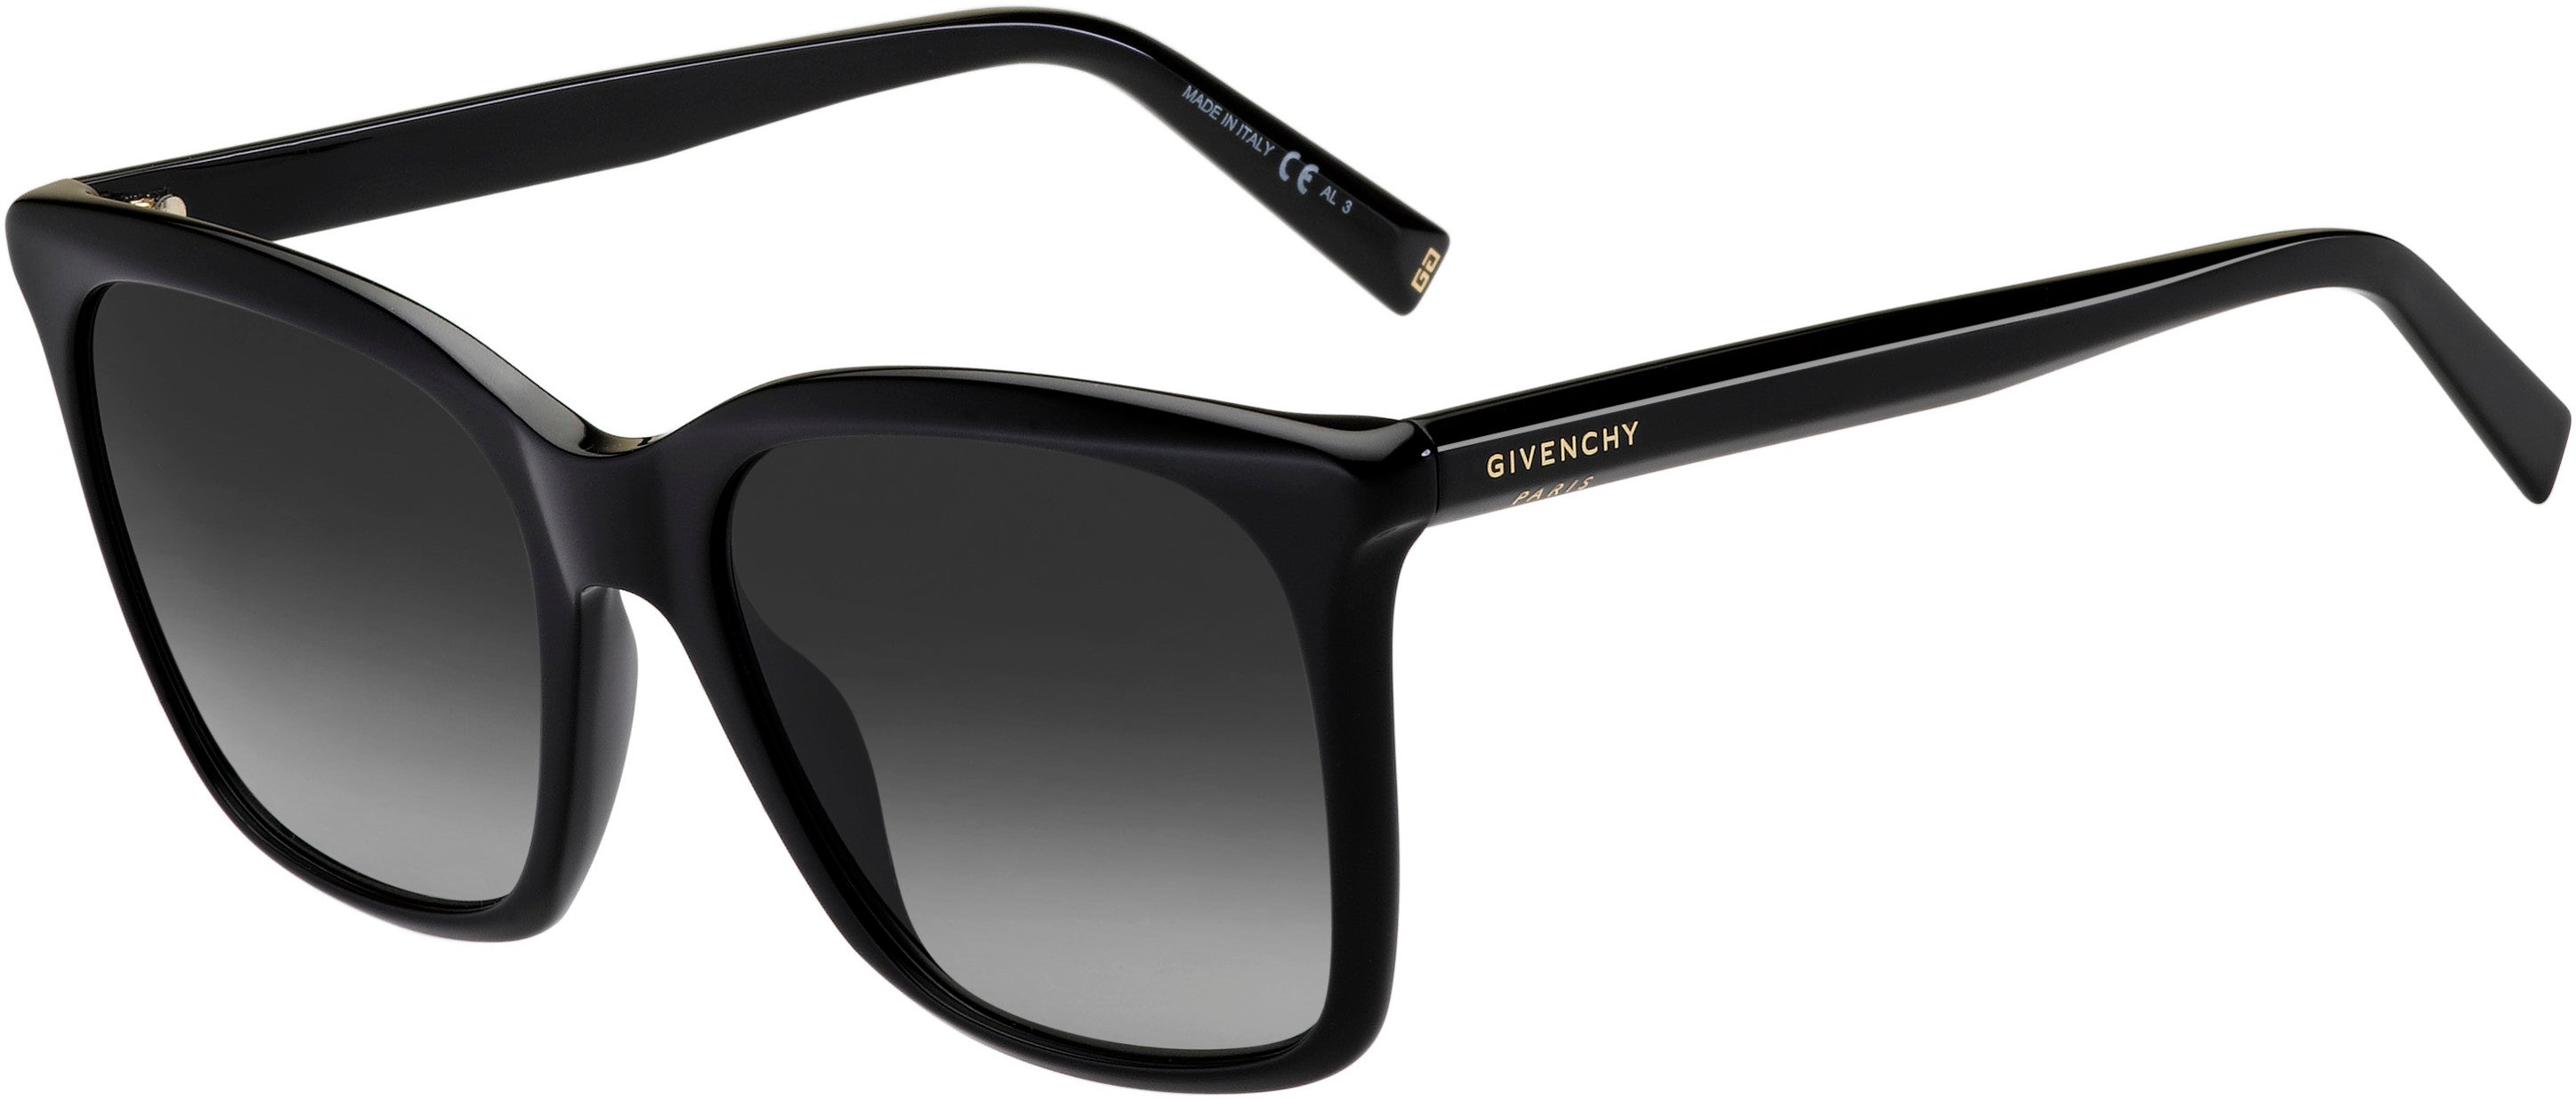  Givenchy 7199/S Square Sunglasses 0807-0807  Black (9O Dark Gray Gradient)